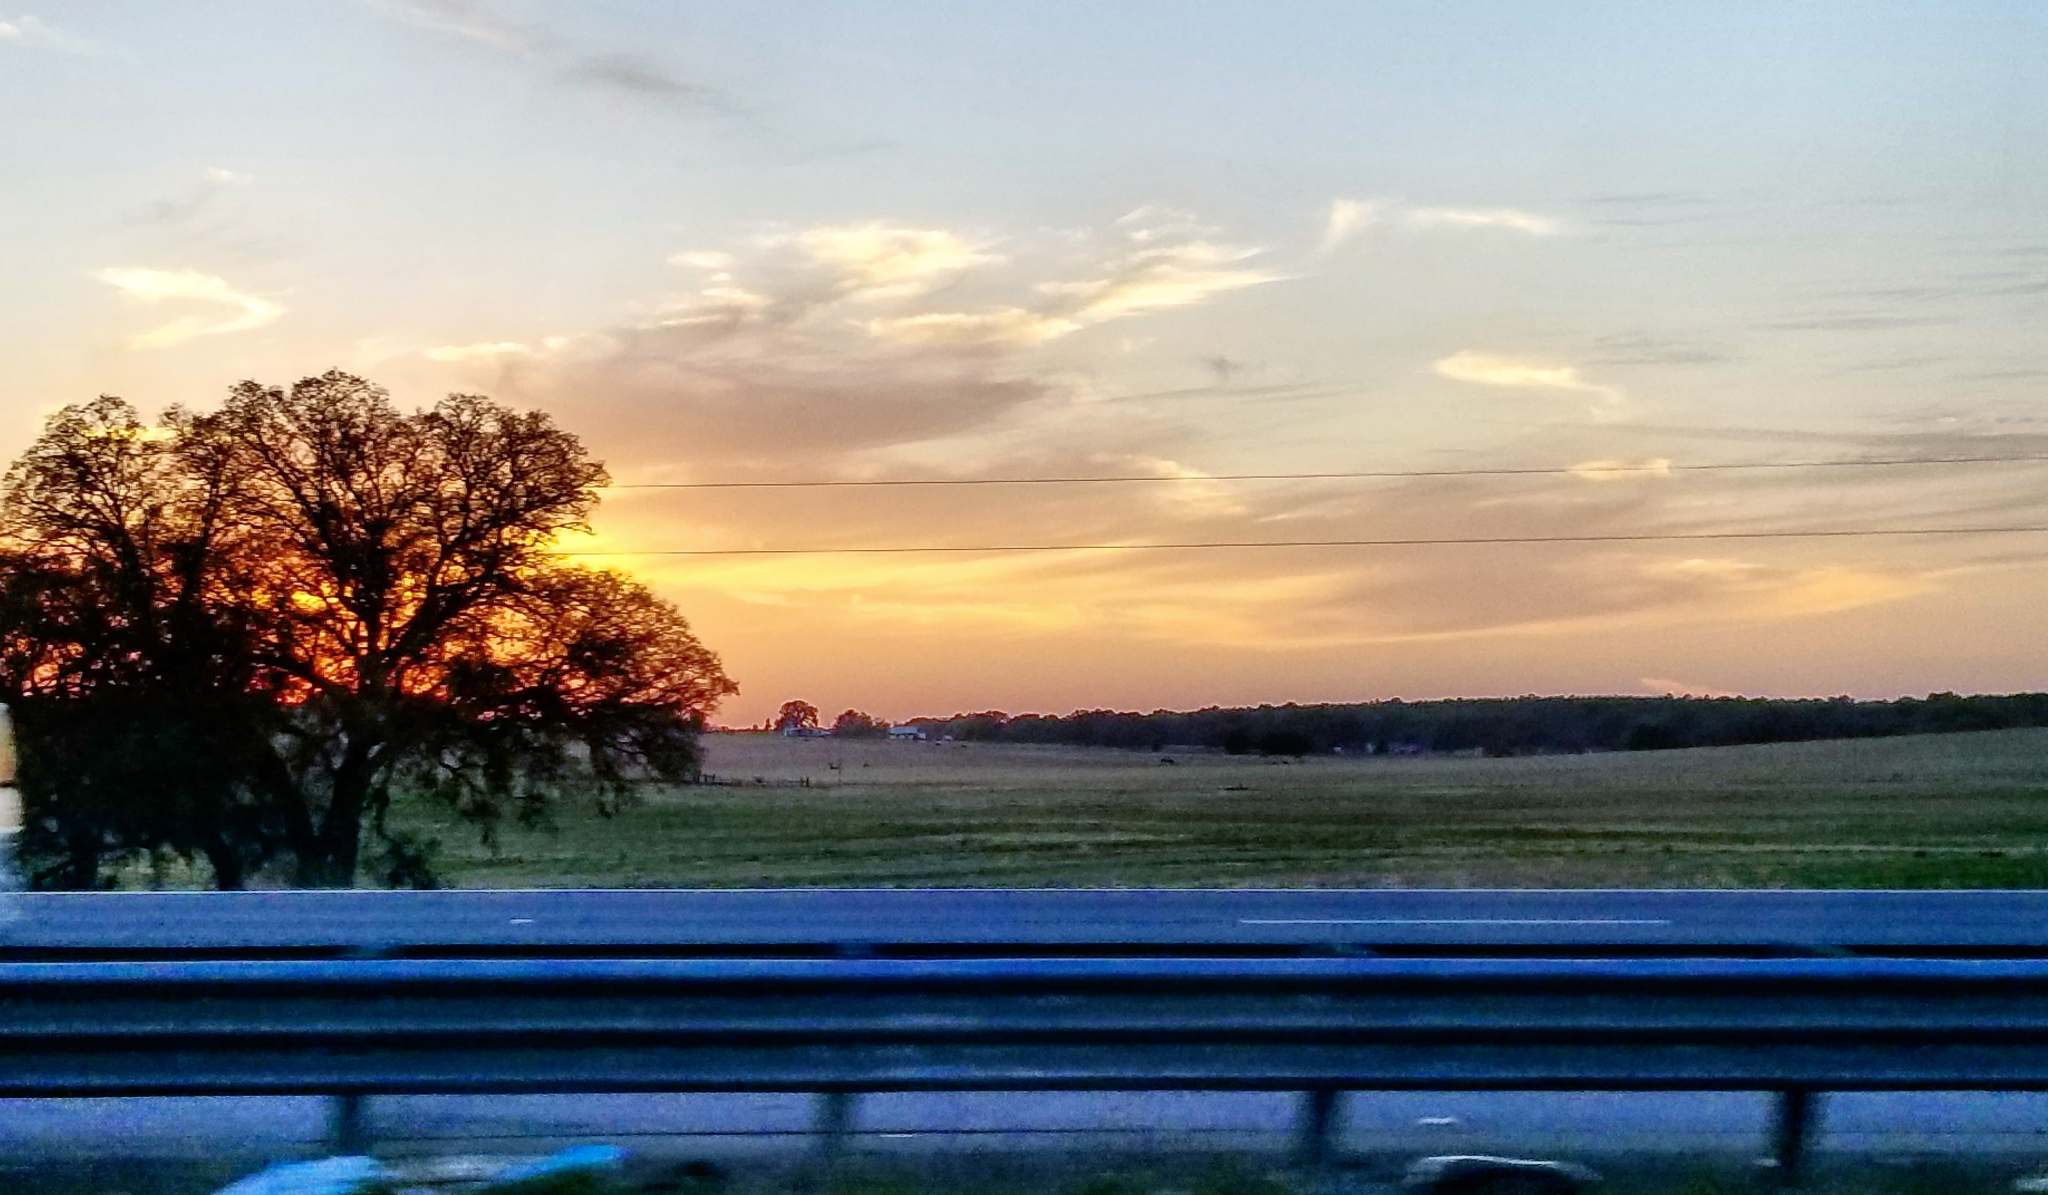 Sunset over the Ocala hills